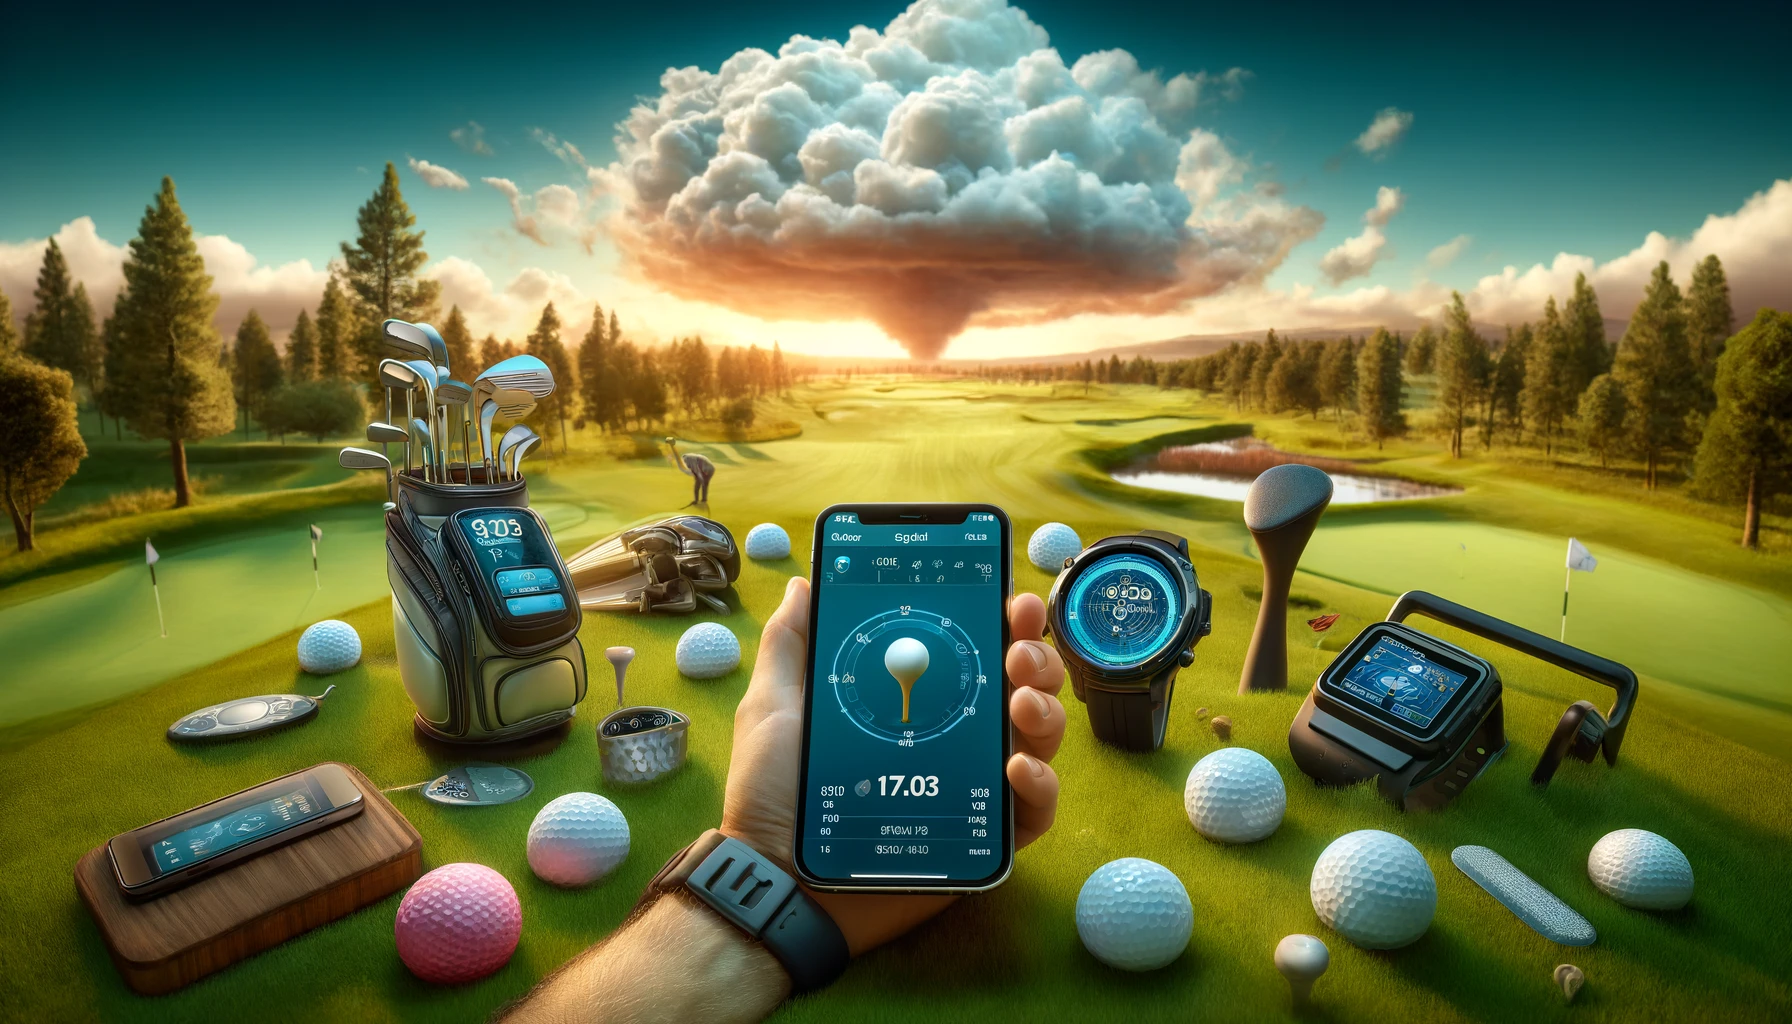 Golf GPS Equipment in BIG Demand